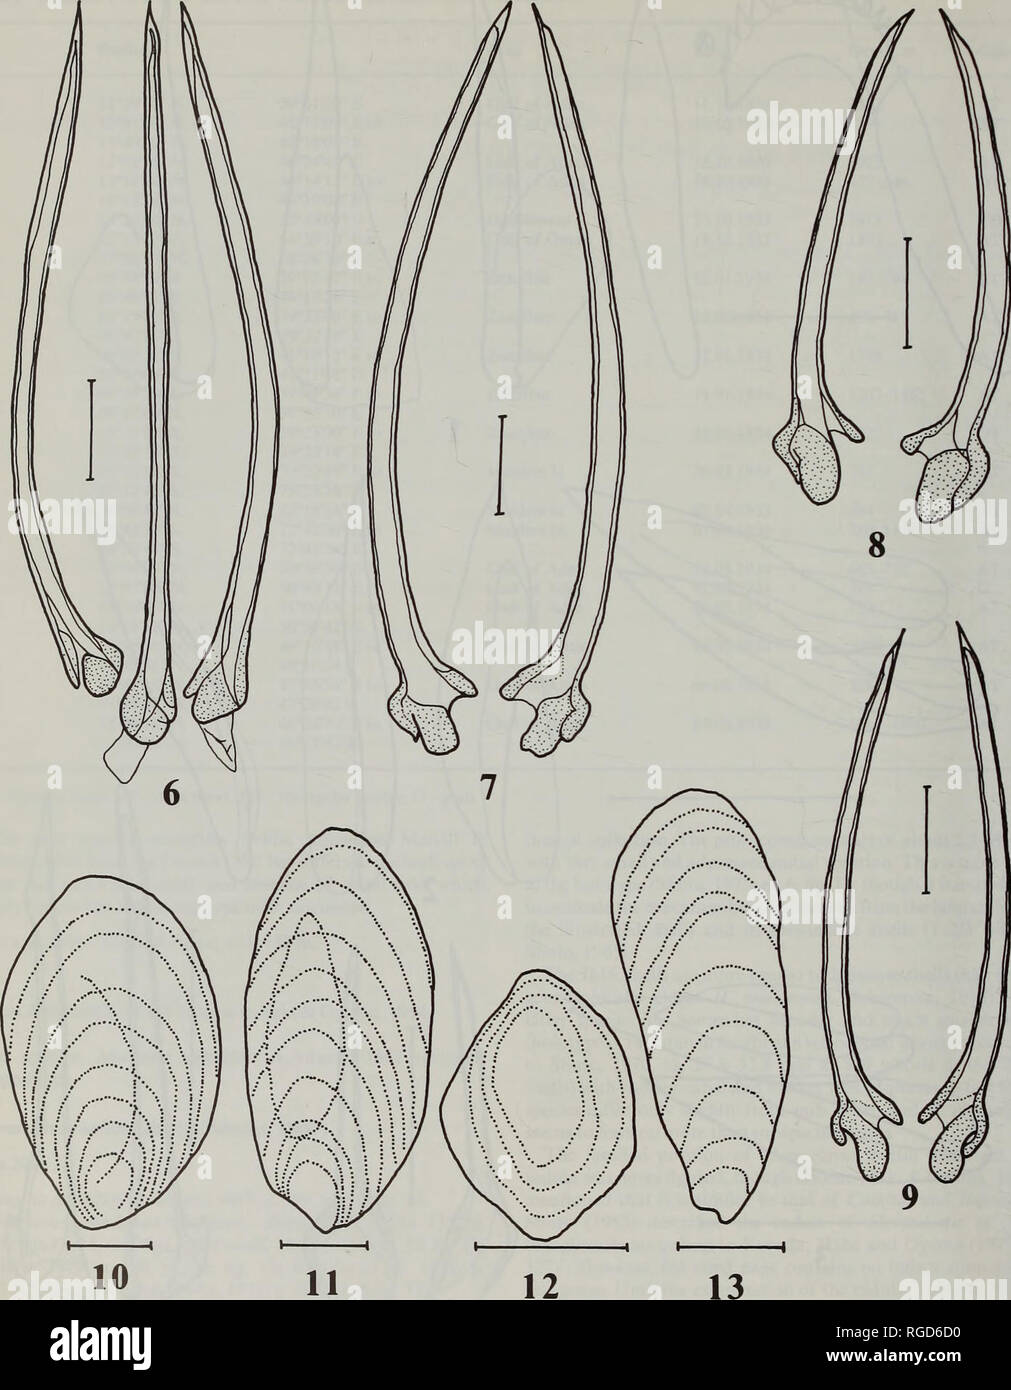 . Bulletin of the Natural History Museum Zoology. A.V. SYSOEV. Figs 6-13 Radulae (6-9) and opercula (10-13). 6- Typhlomangelia maldivica Sysoev, new species, paratype, stn 143, H = 27.8 mm; 7 - Bathytoma (Parabathytoma) oldhami(E.A. Smith, 1899), stn 145, H = 41.0 mm; 8-fi (P.) regnansMdviW, 1918, stn 34, H = 26.6mm;9-B. (P.)fissa(von Martens, 1901), stn 176, H = 35.3 mm; 10 - Splendrillia zanzibarica Sysoev, new species, holotype; 11 - Inquisitor indistinctus Sysoev, new species, paratype, stn 145, H = 27.4 mm; 12,13-Borsonia (Cordieria) symbiophora Sysoev, new species, paratypes, stn 185, H  Stock Photo